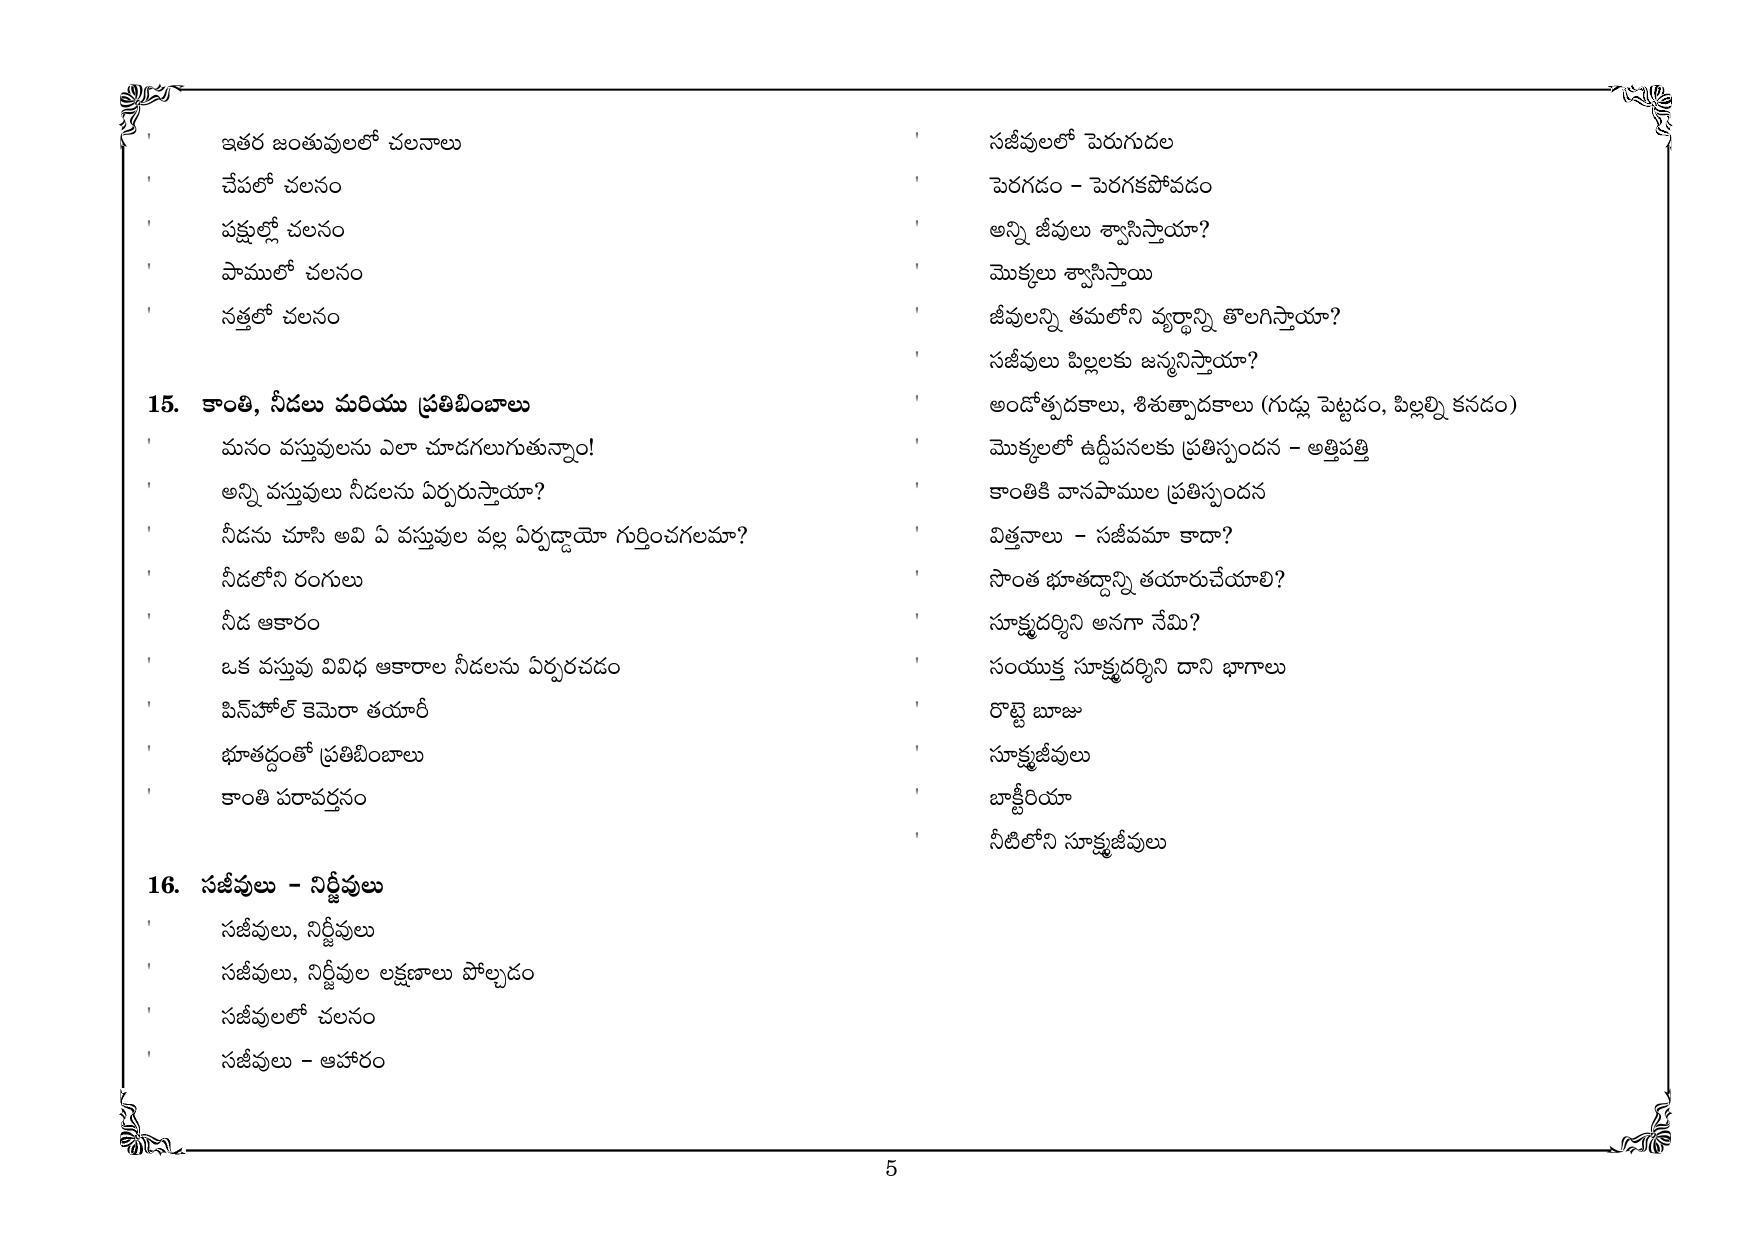 Telangana Baord General Science (Classes VI and VII) Syllabus - Telugu Medium - Page 5